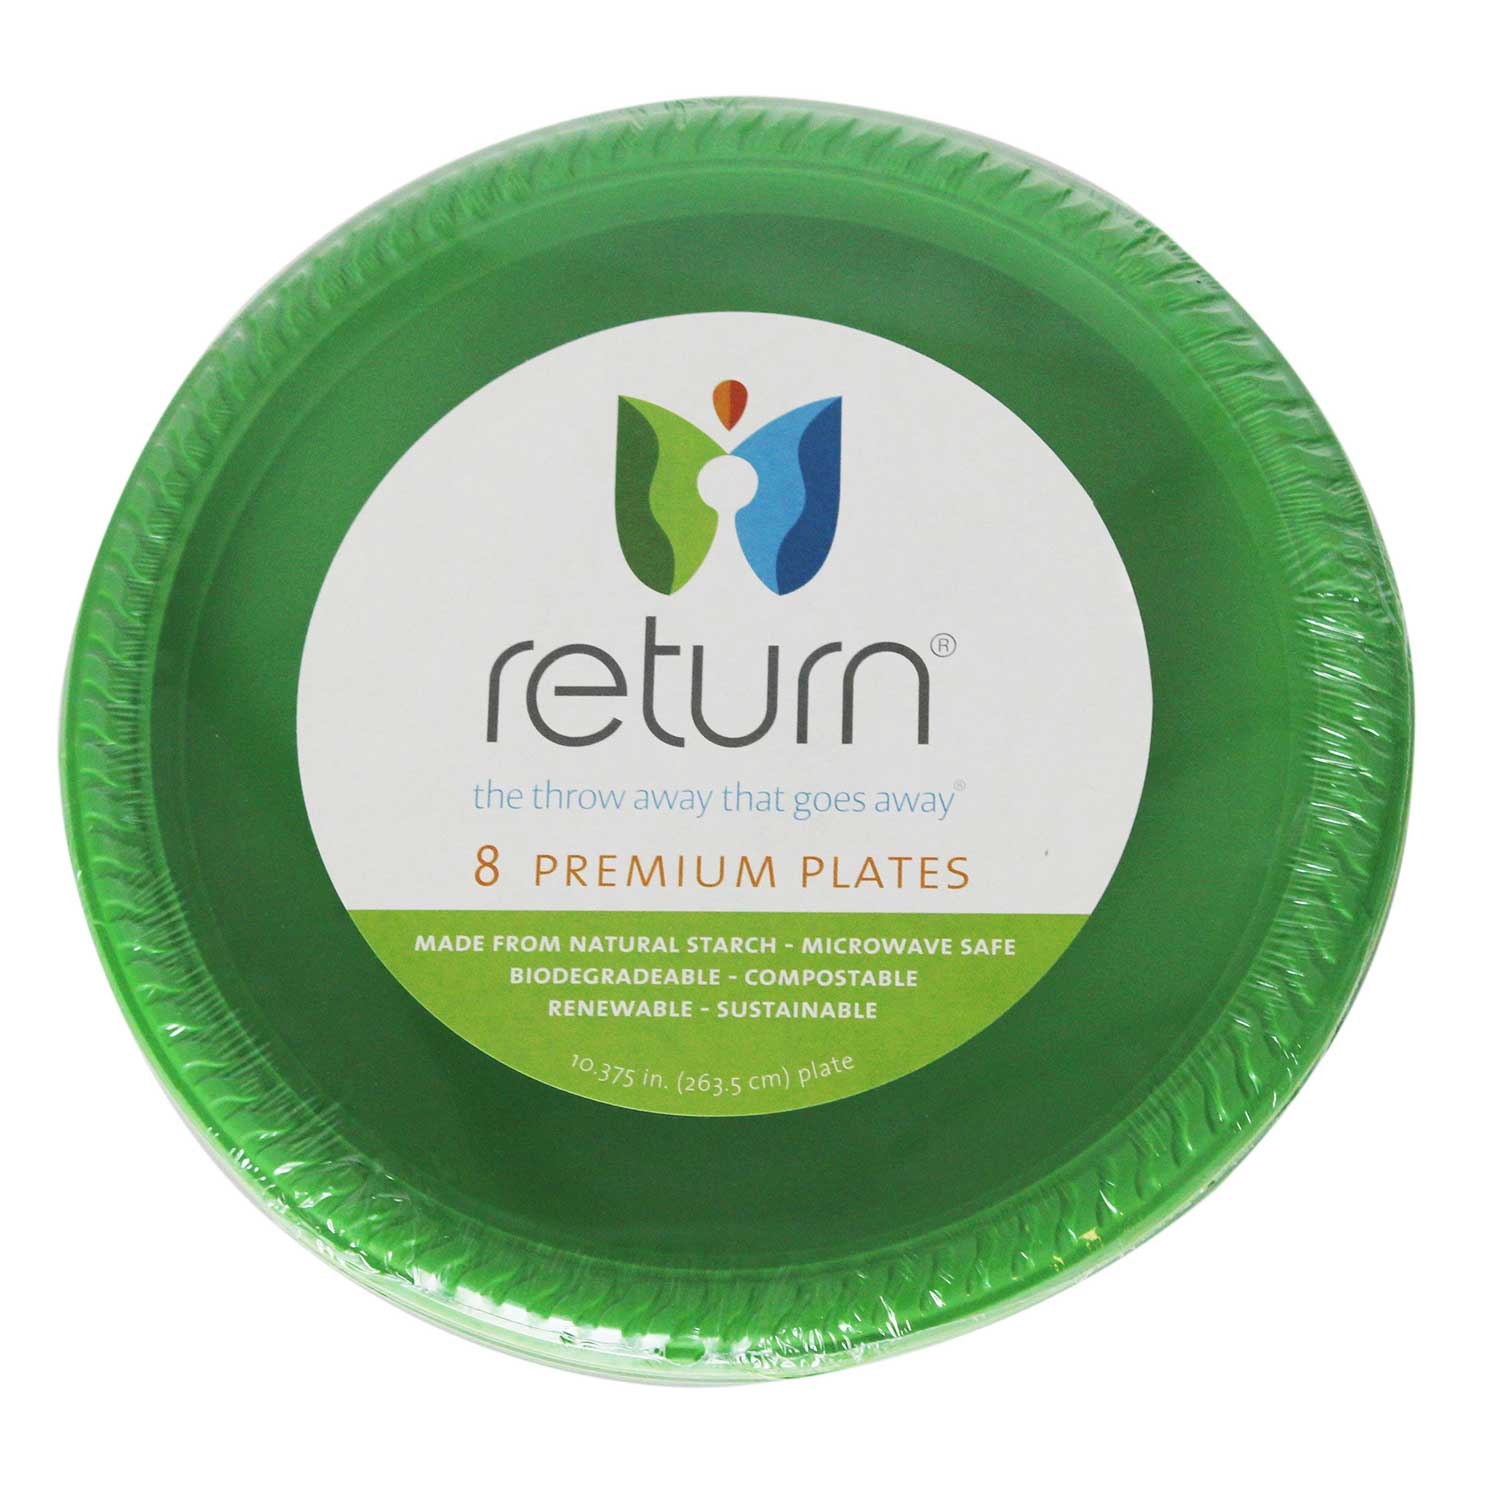 yumi-1025-return-10-3-8-inch-green-compostable-plates-8-pieces.jpg